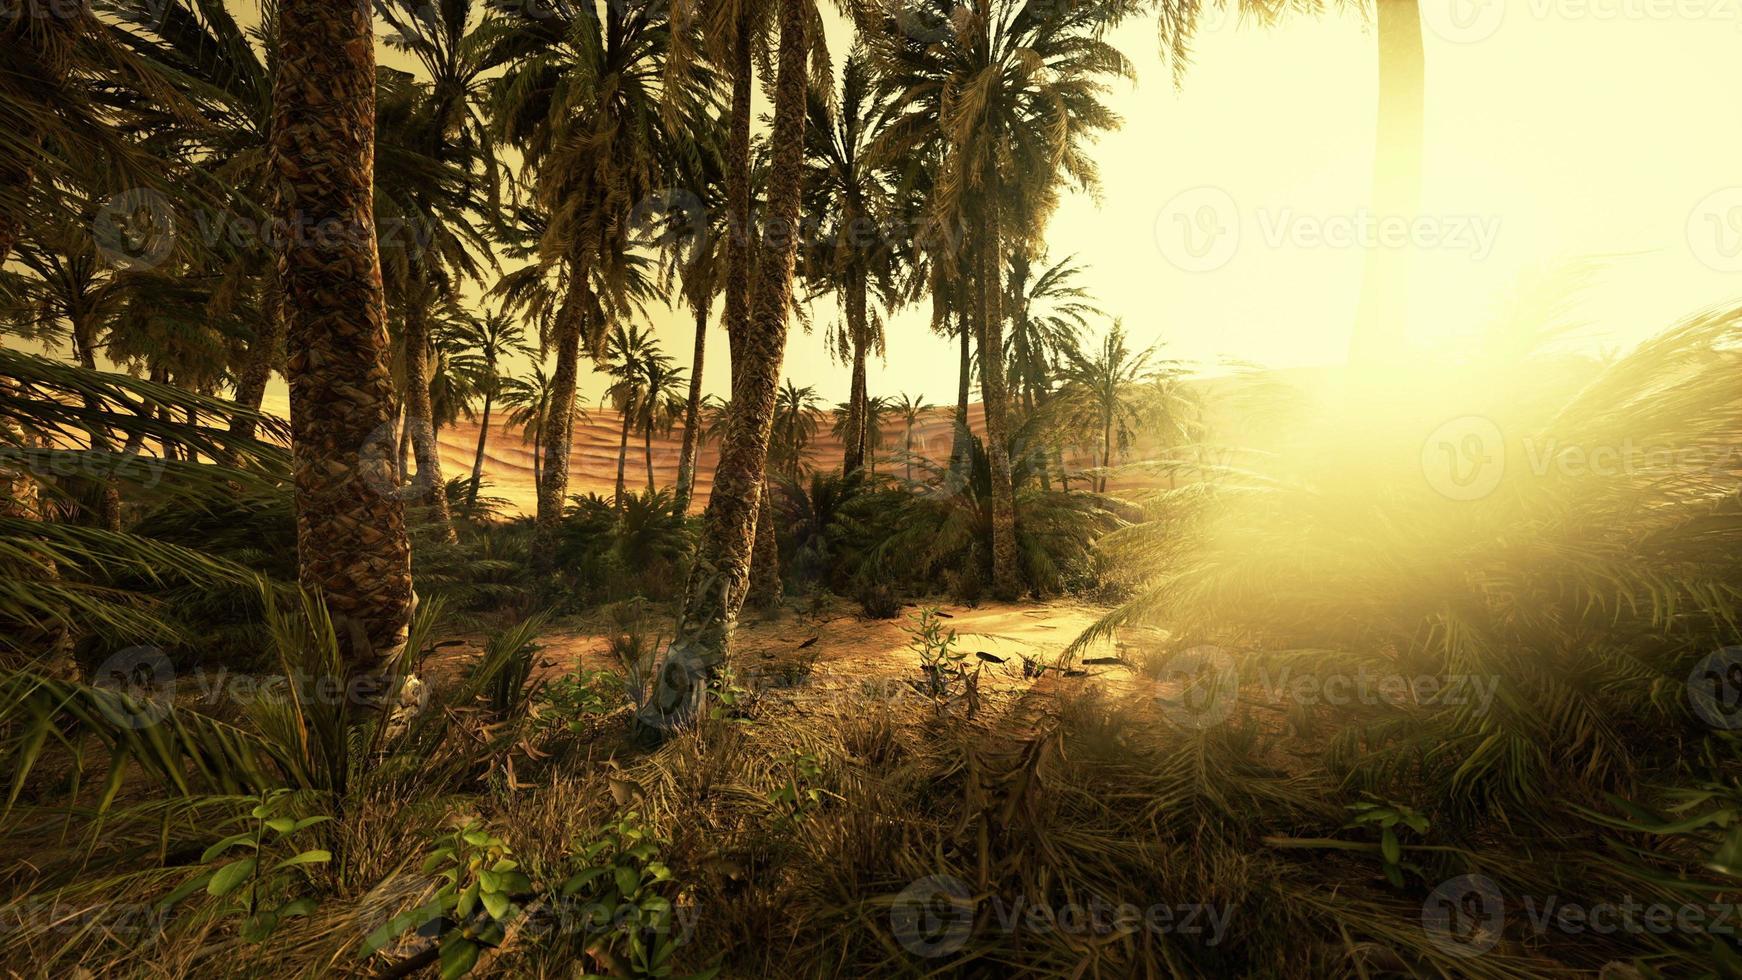 vale de savana e deserto de areia após o pôr do sol colorido foto